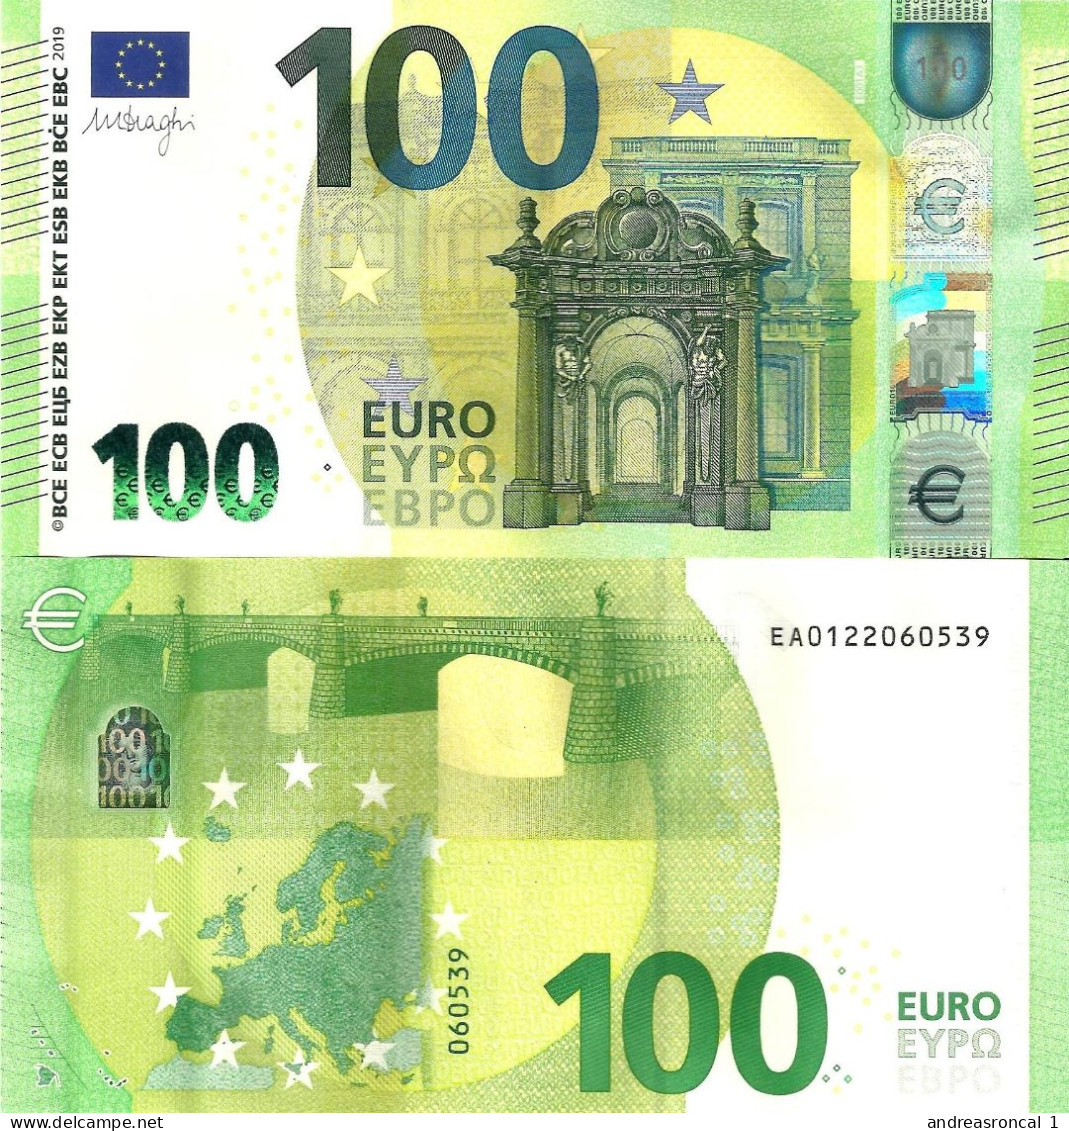 European Union EU 100 Euros 2019 / [2020] (France) P-24e UNC - 100 Euro